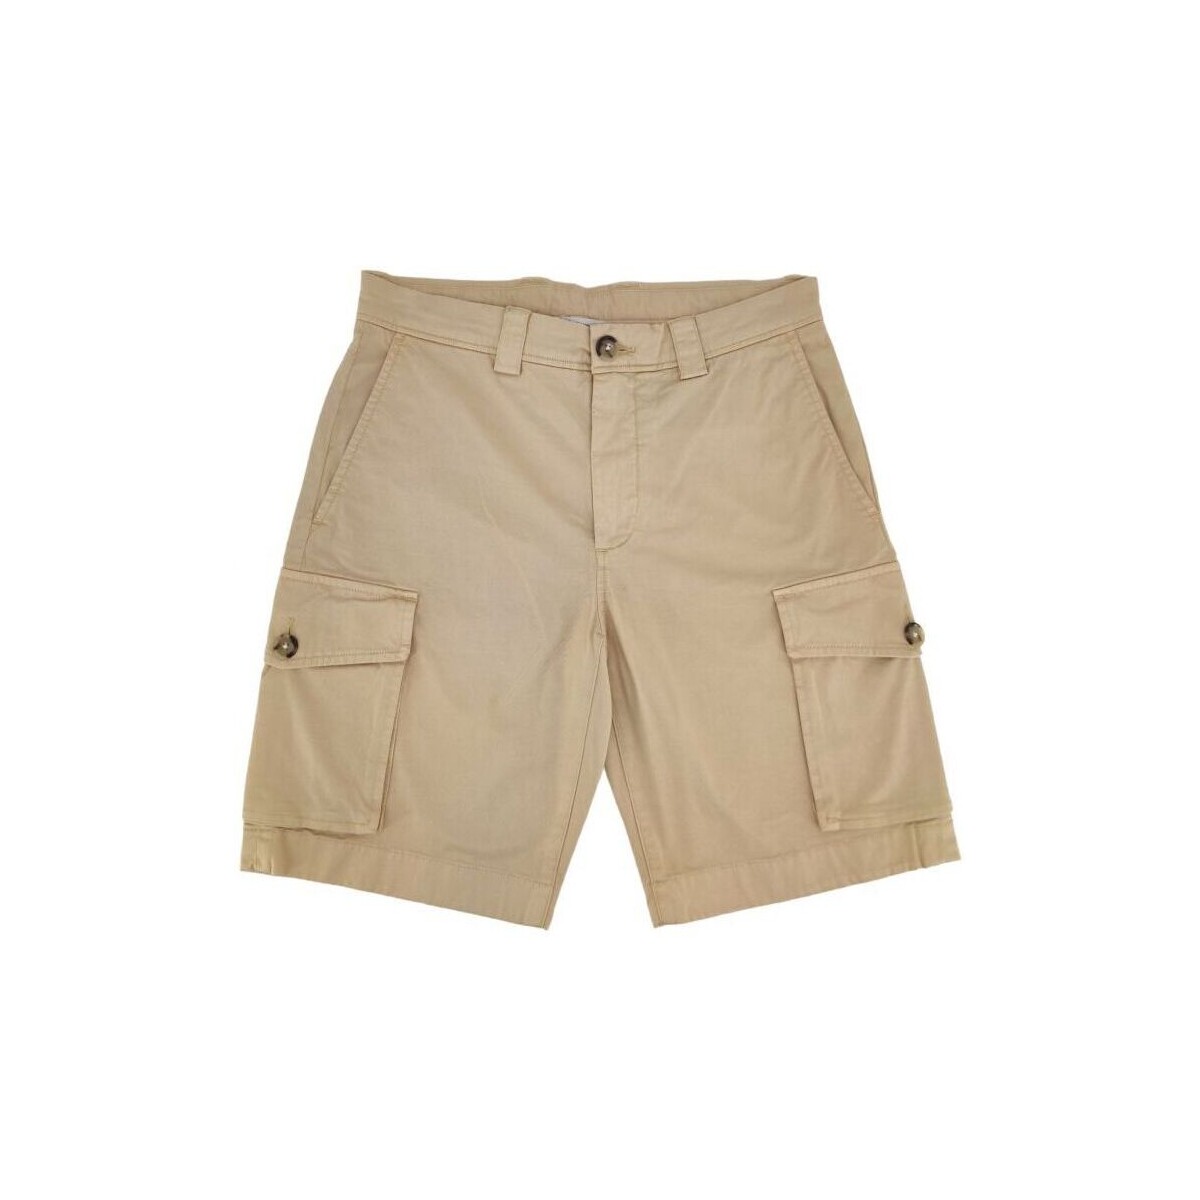 Vêtements Homme Shorts / Bermudas Woolrich Shorts Classic Cargo Homme Beach Sand Beige